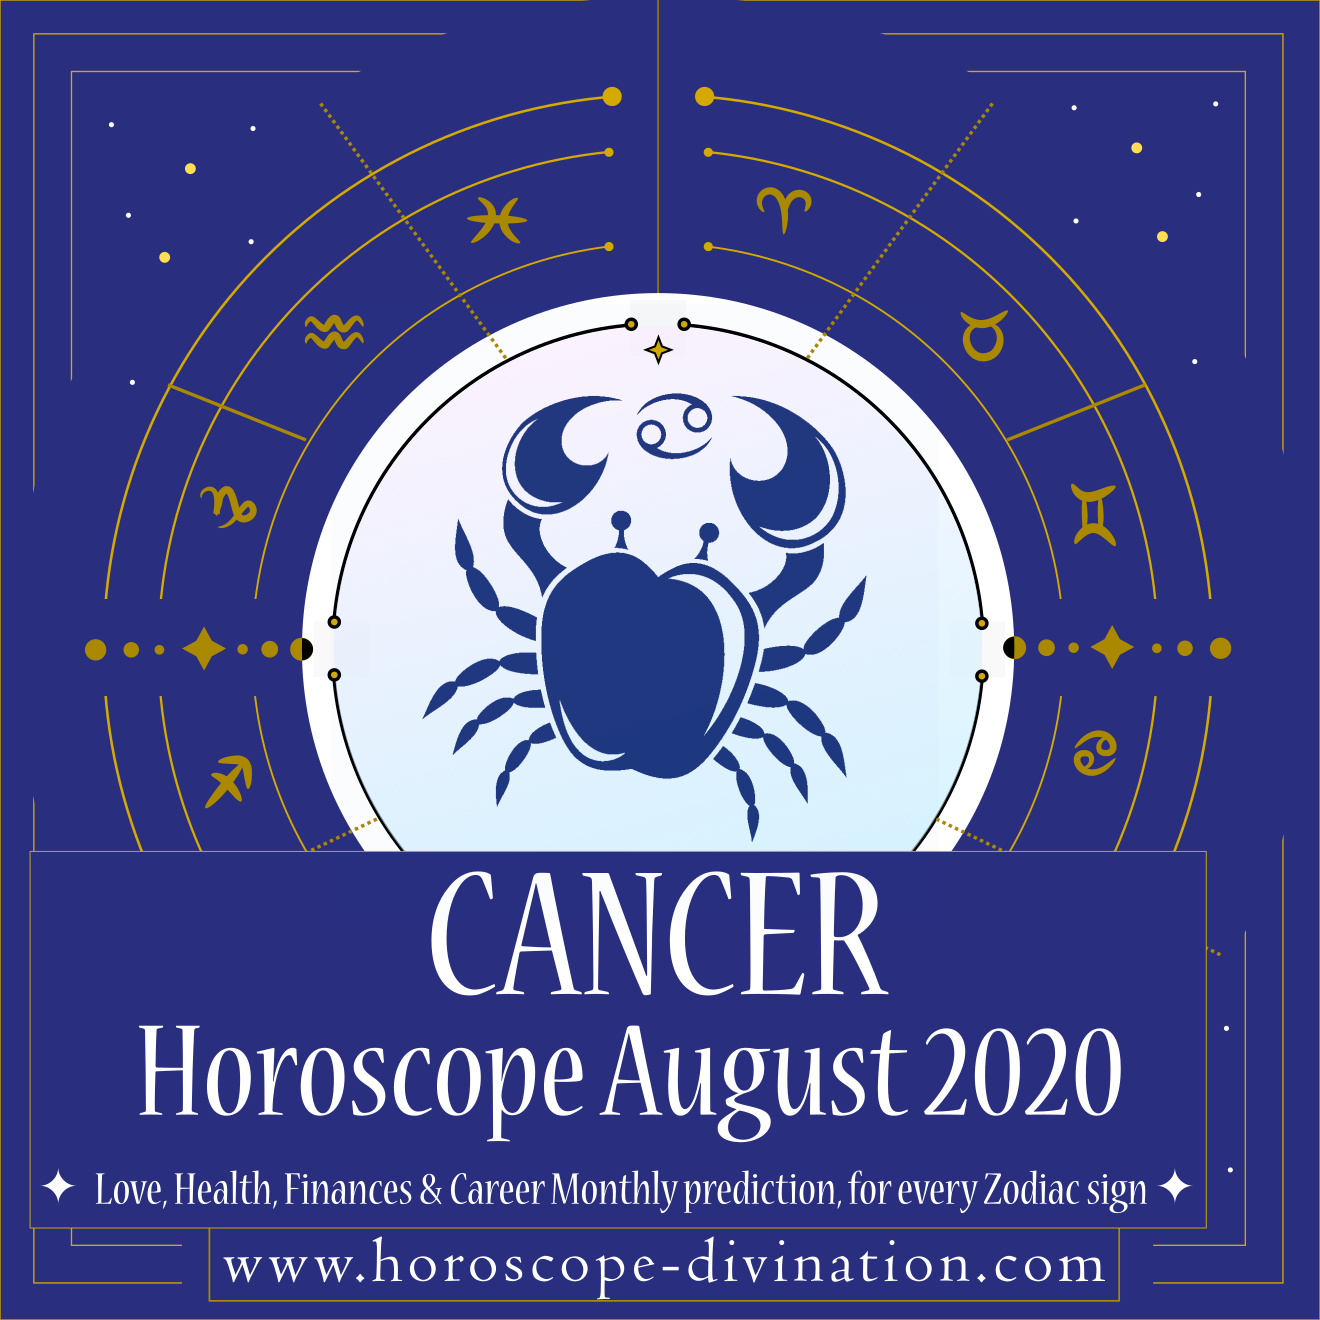 Monthly Horoscope August 2020: 12x Love, Career & Health